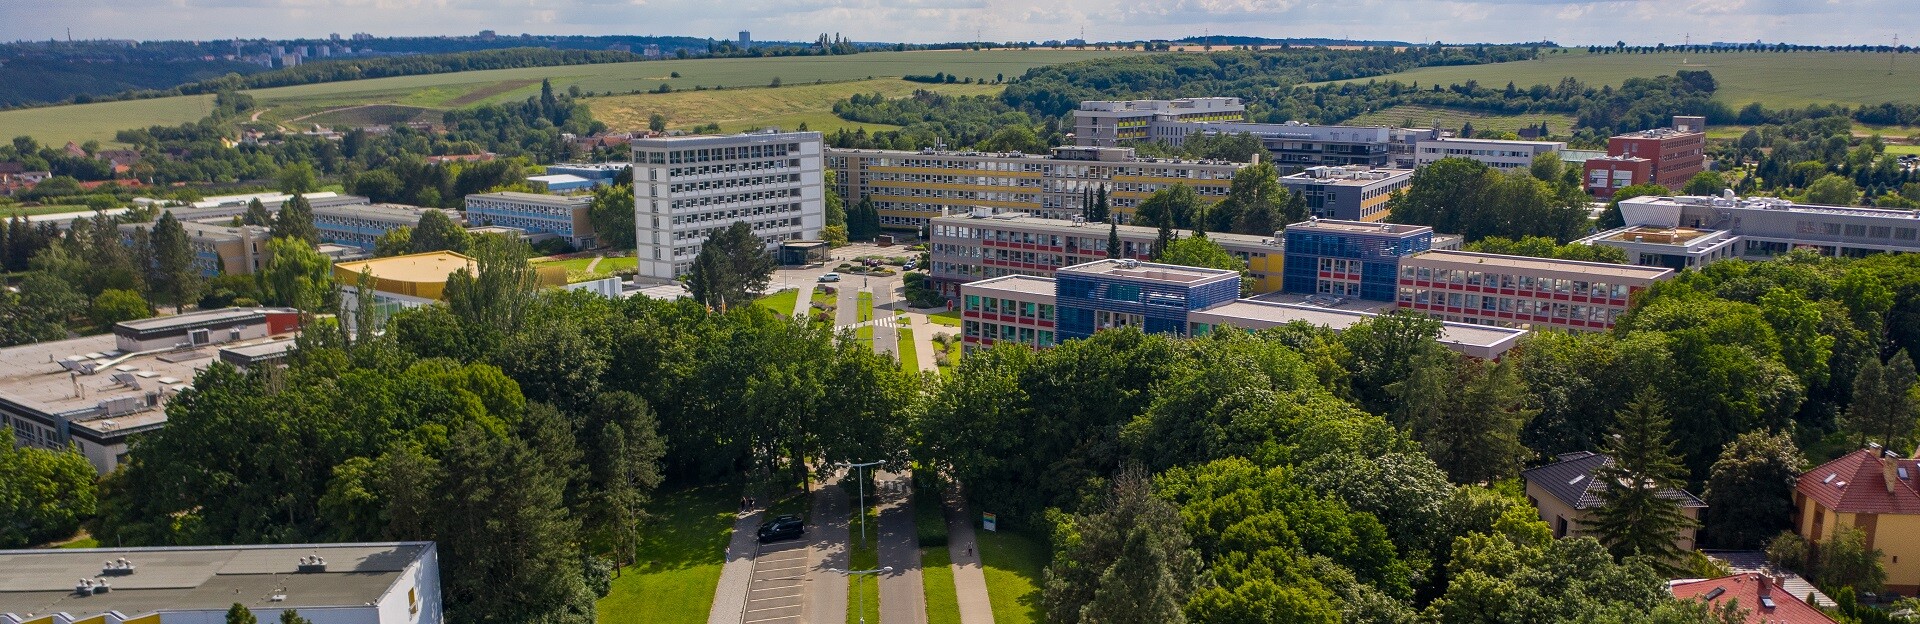 Czech University of Life Sciences (CZU)